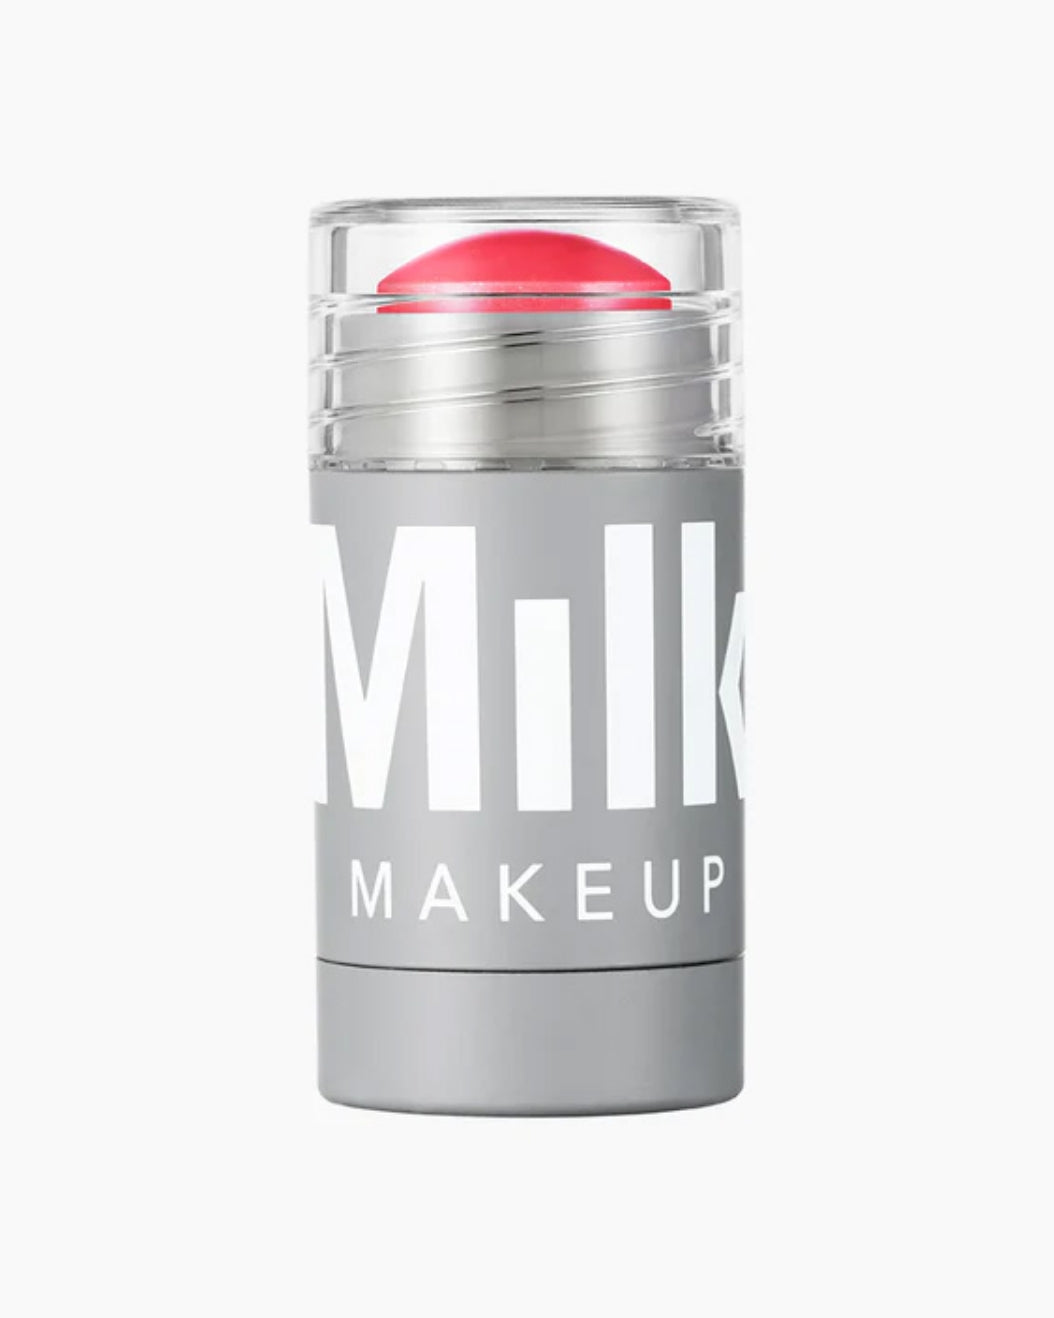 Tube of Milk Makeup Lip + Cheek in Flip on a white background.